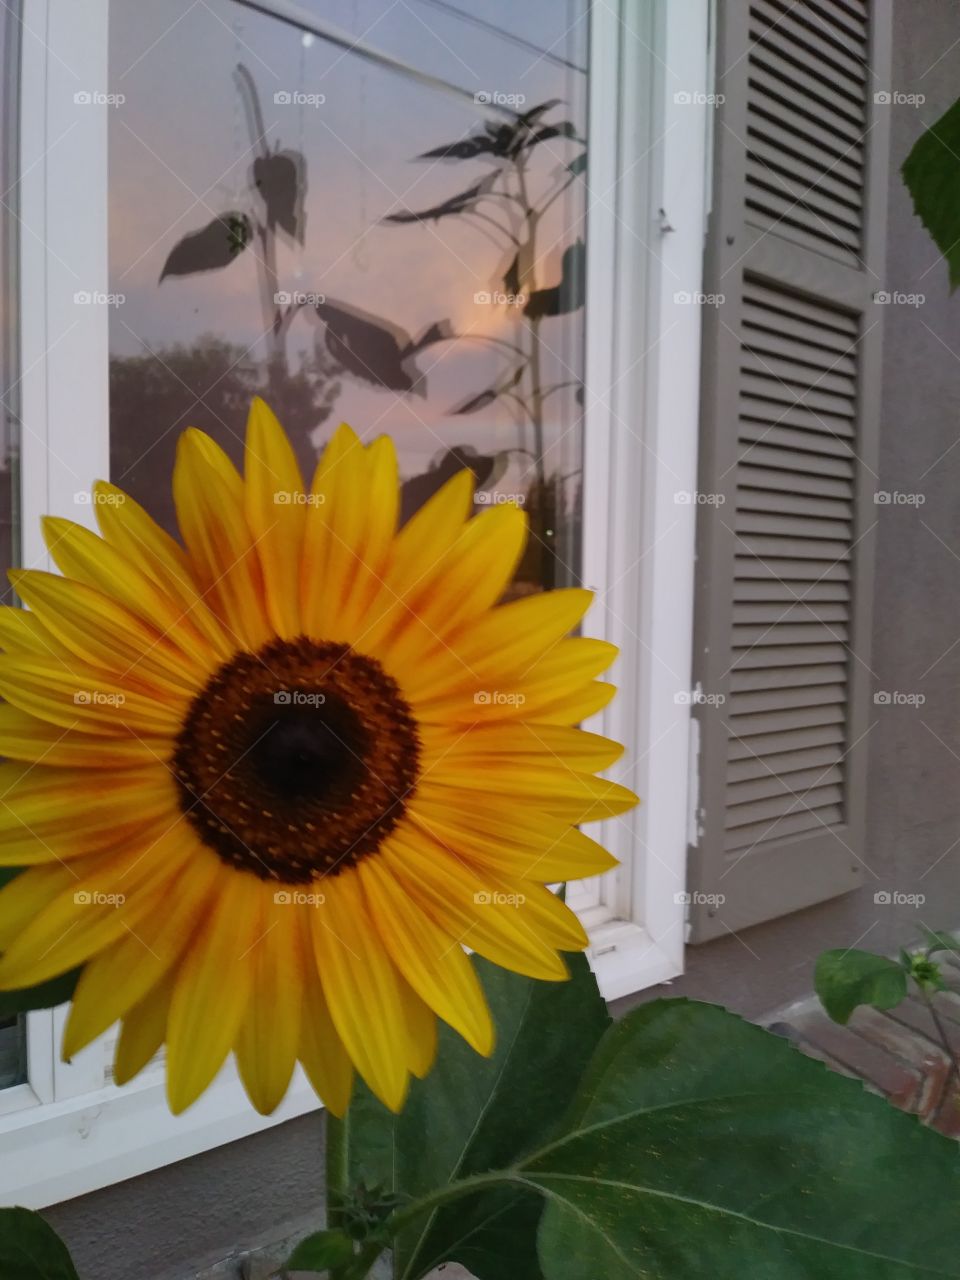 sunflower at sunset